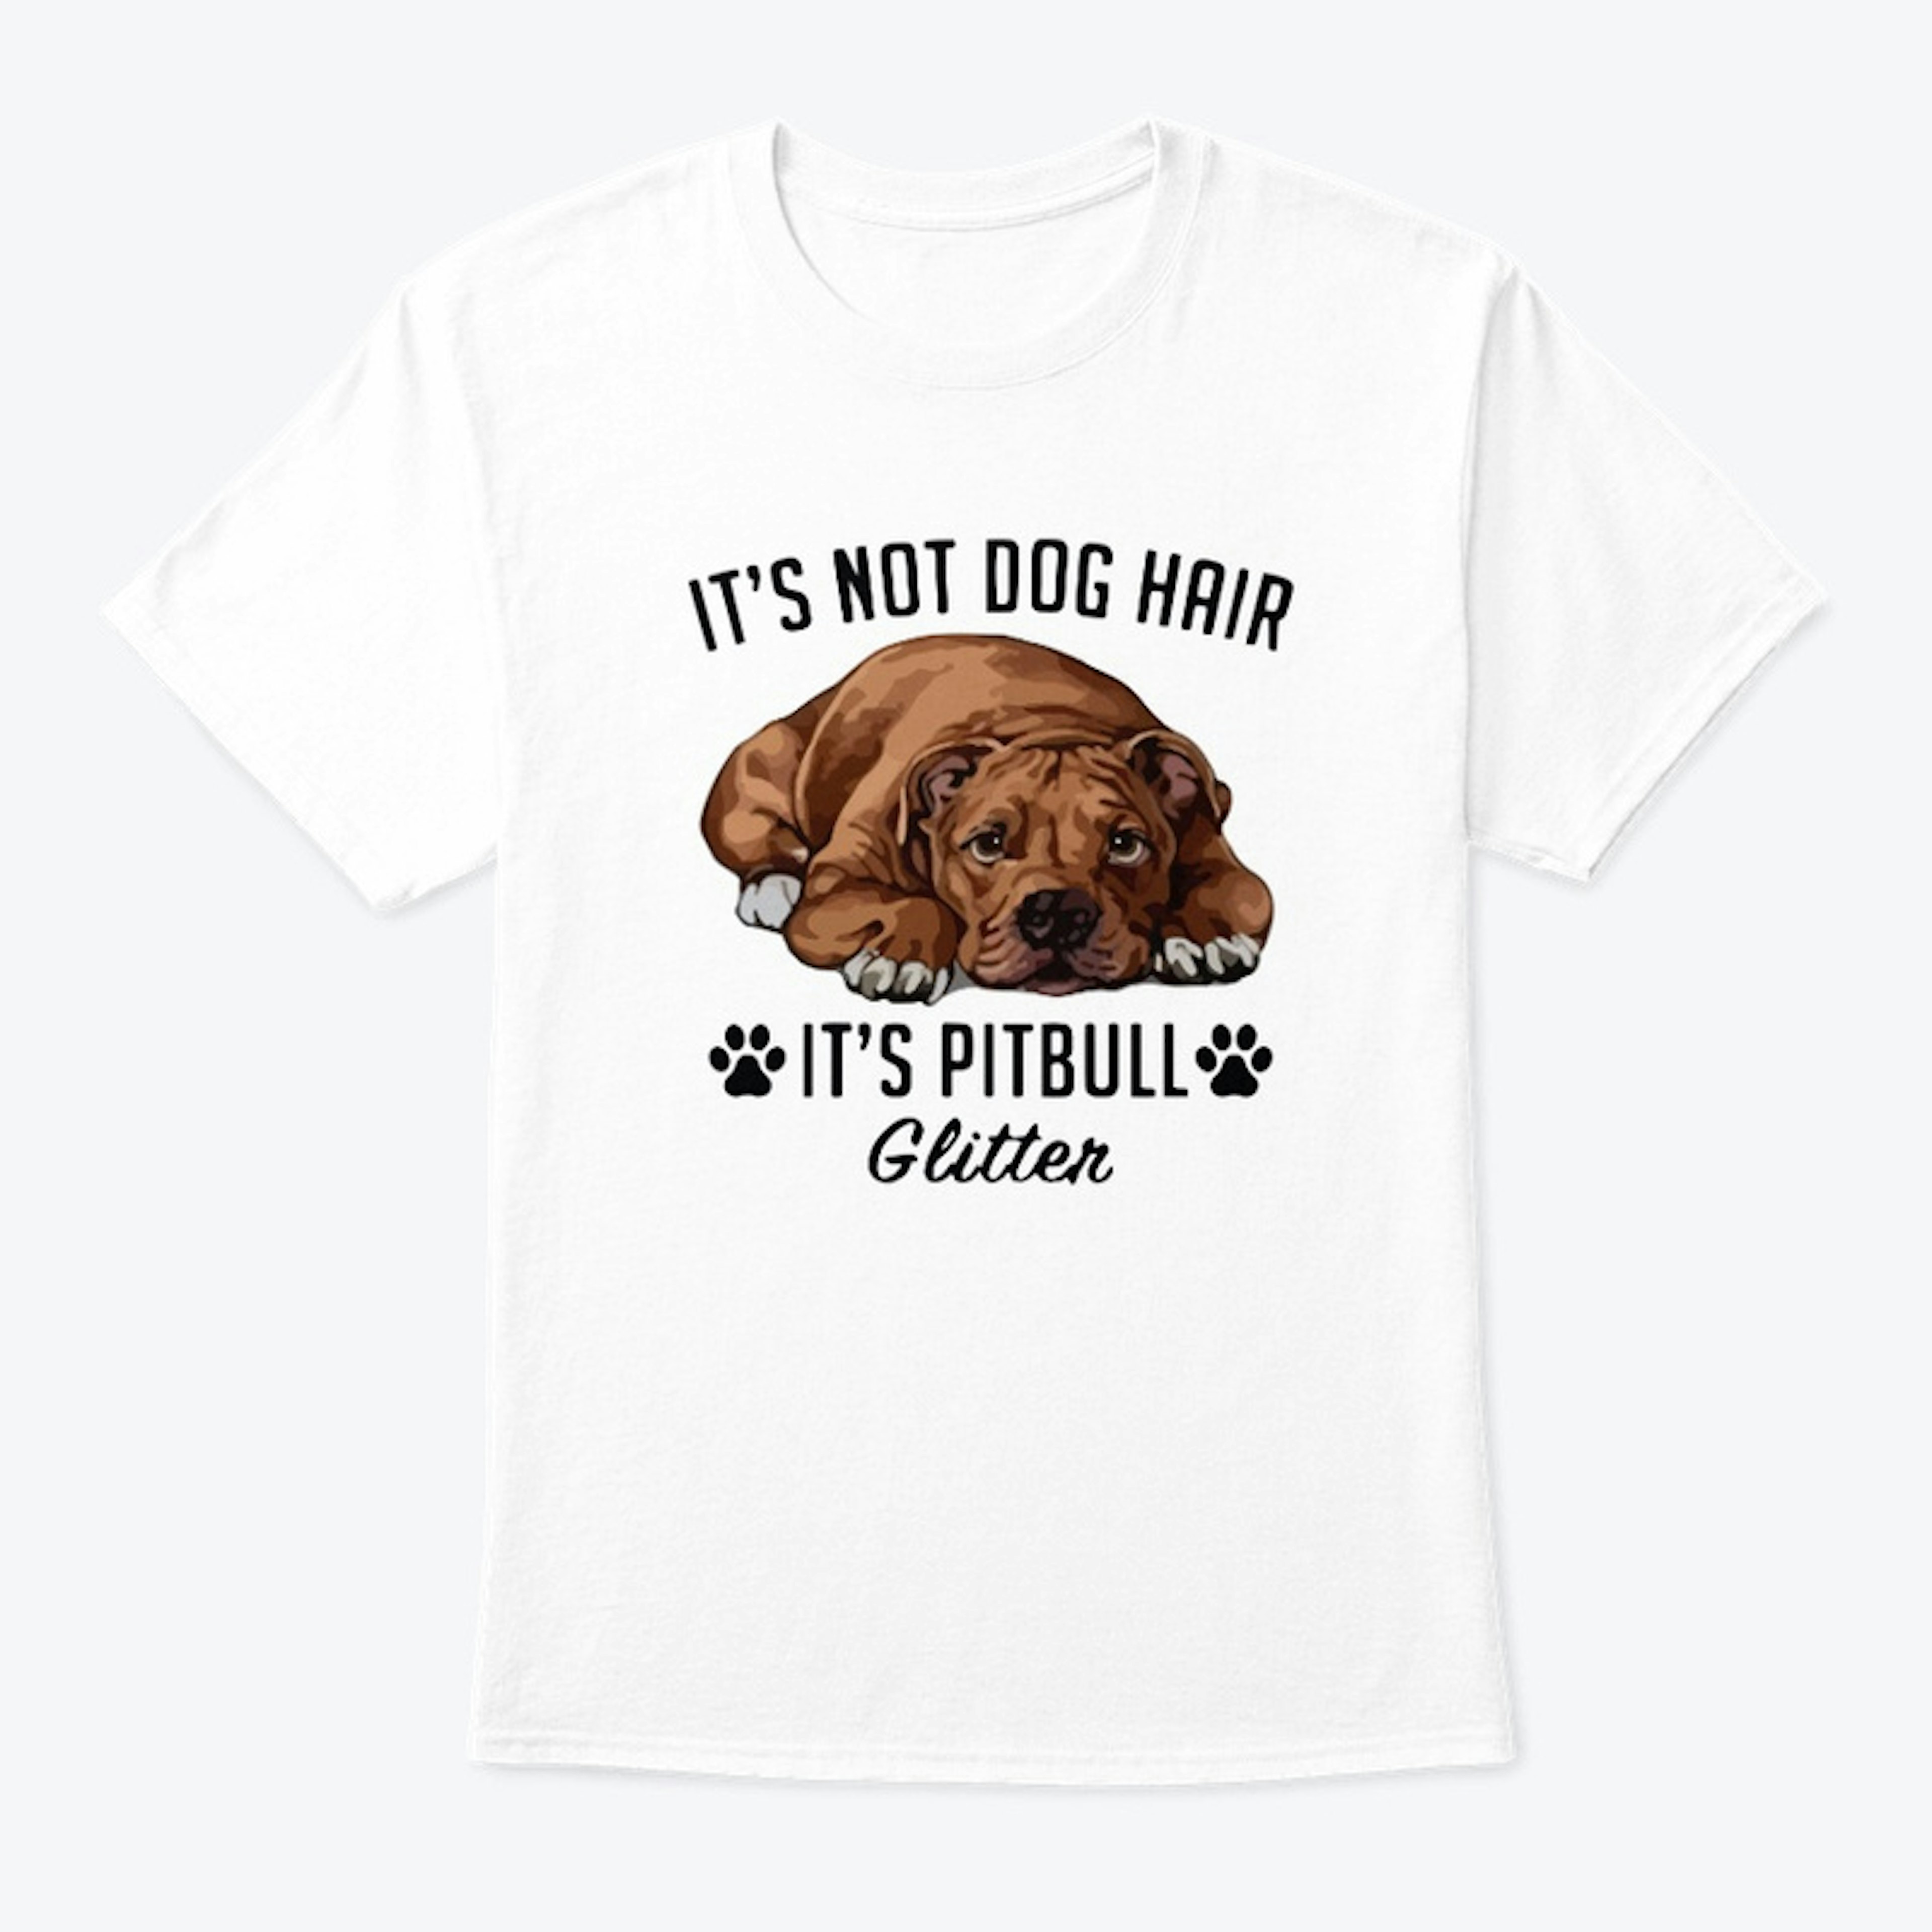 Pitbull Merchandise